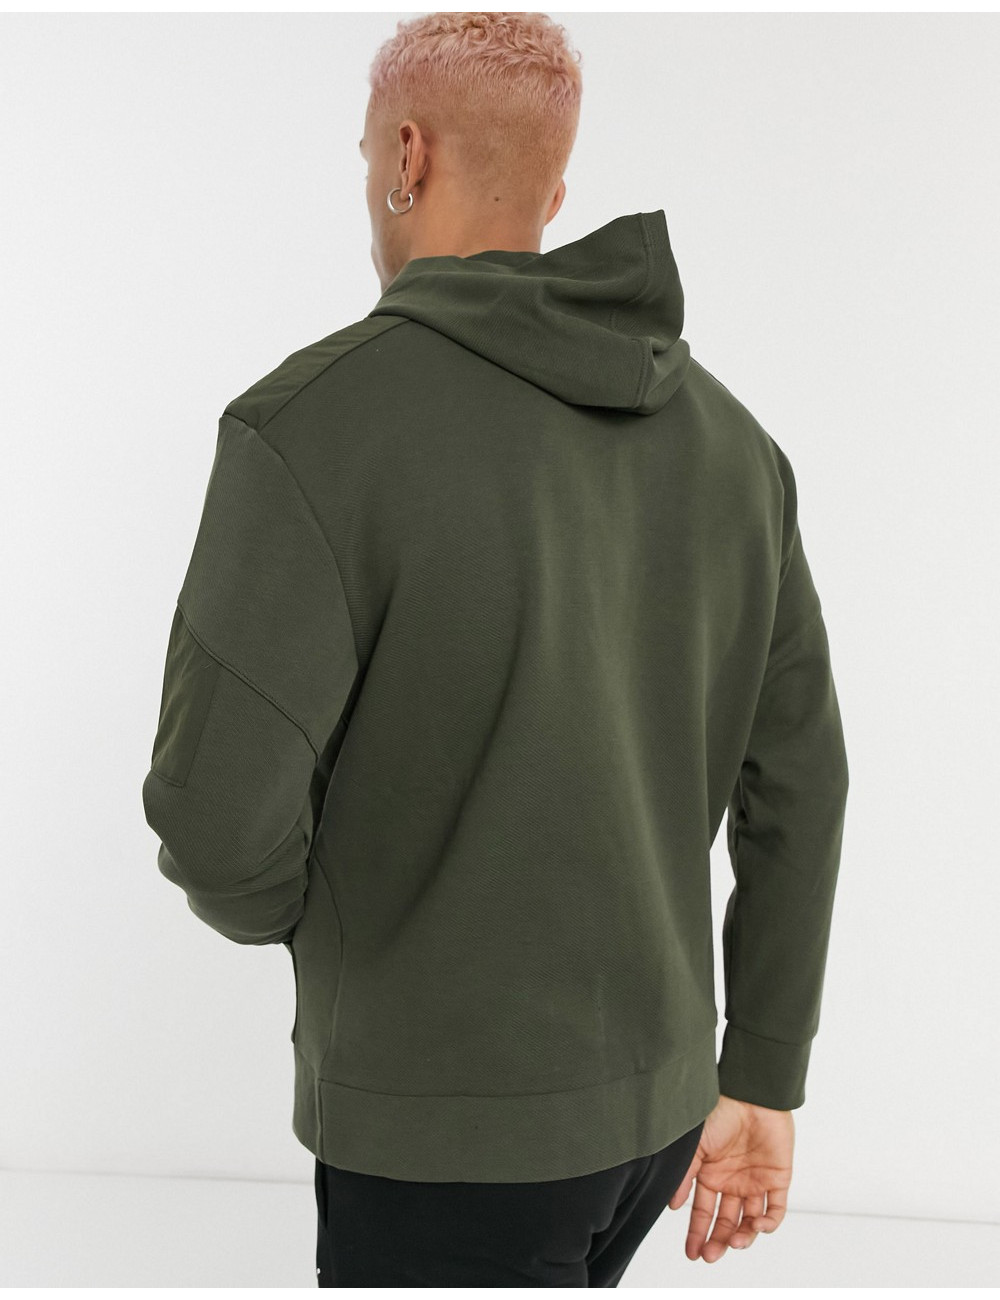 Puma nutility hoodie in green